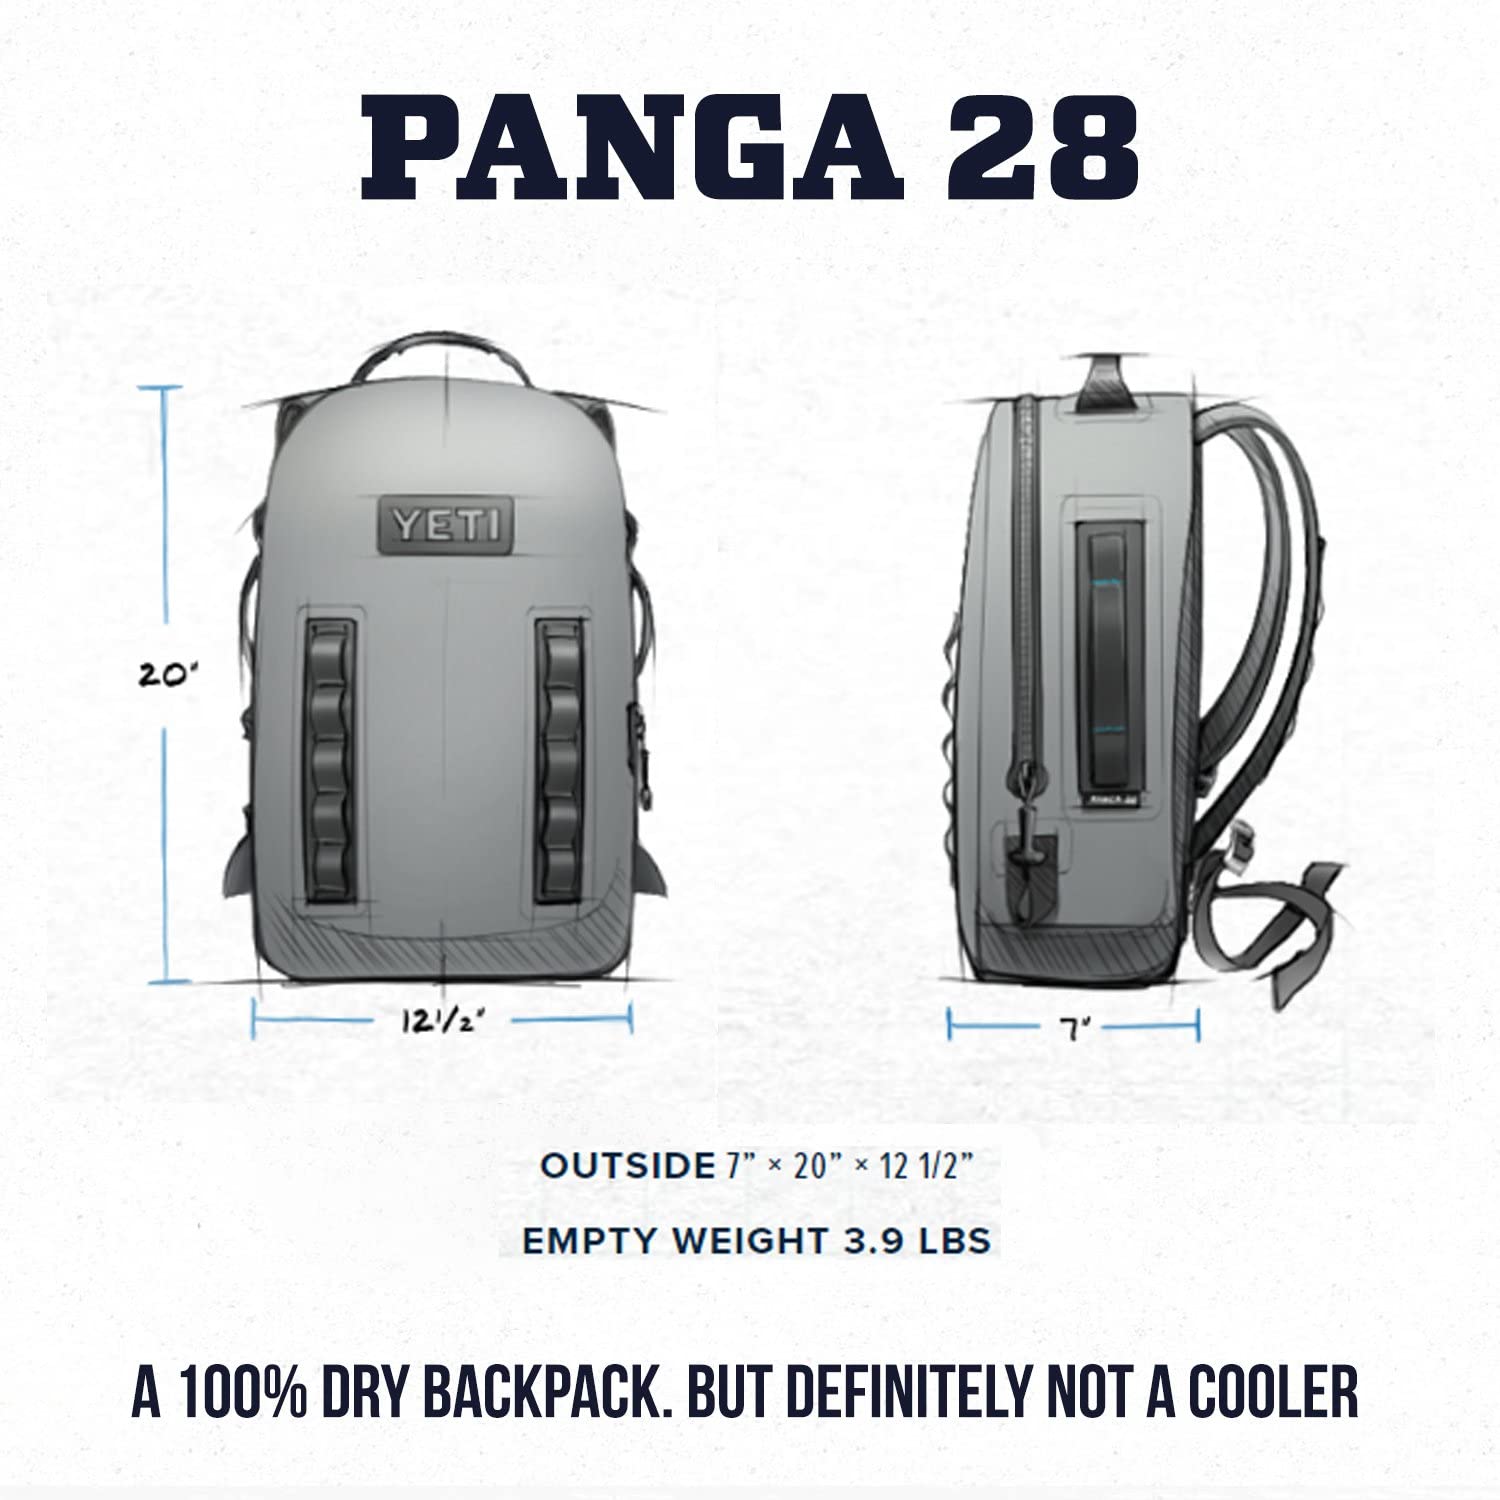 YETI Panga 28 Backpack